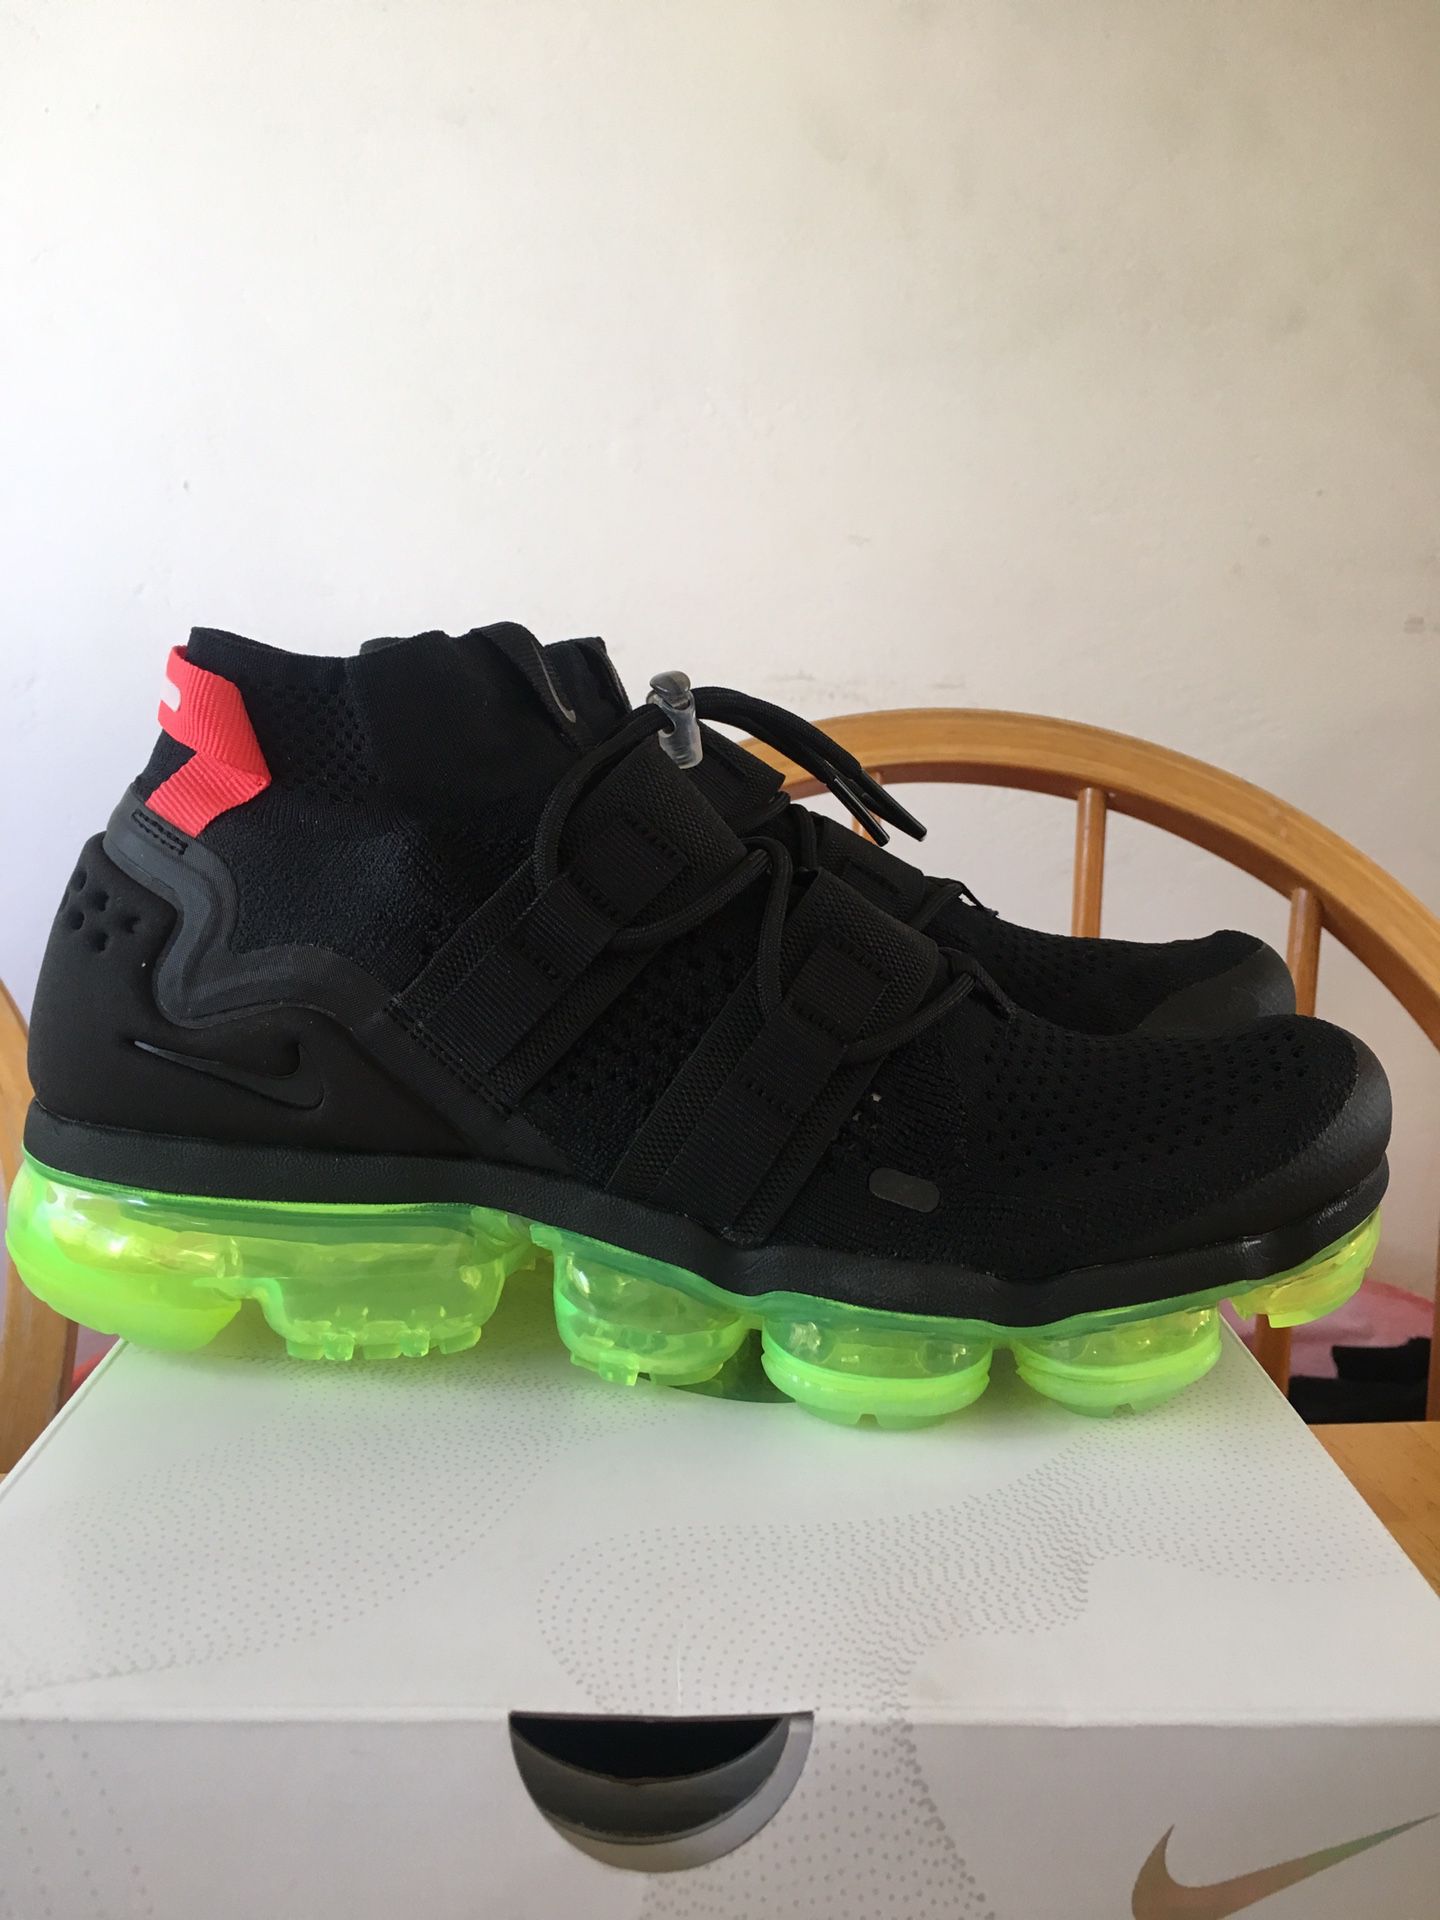 Brand new Nike air vapor max flyknit utility premium running shoes black volt men’s size 9.5